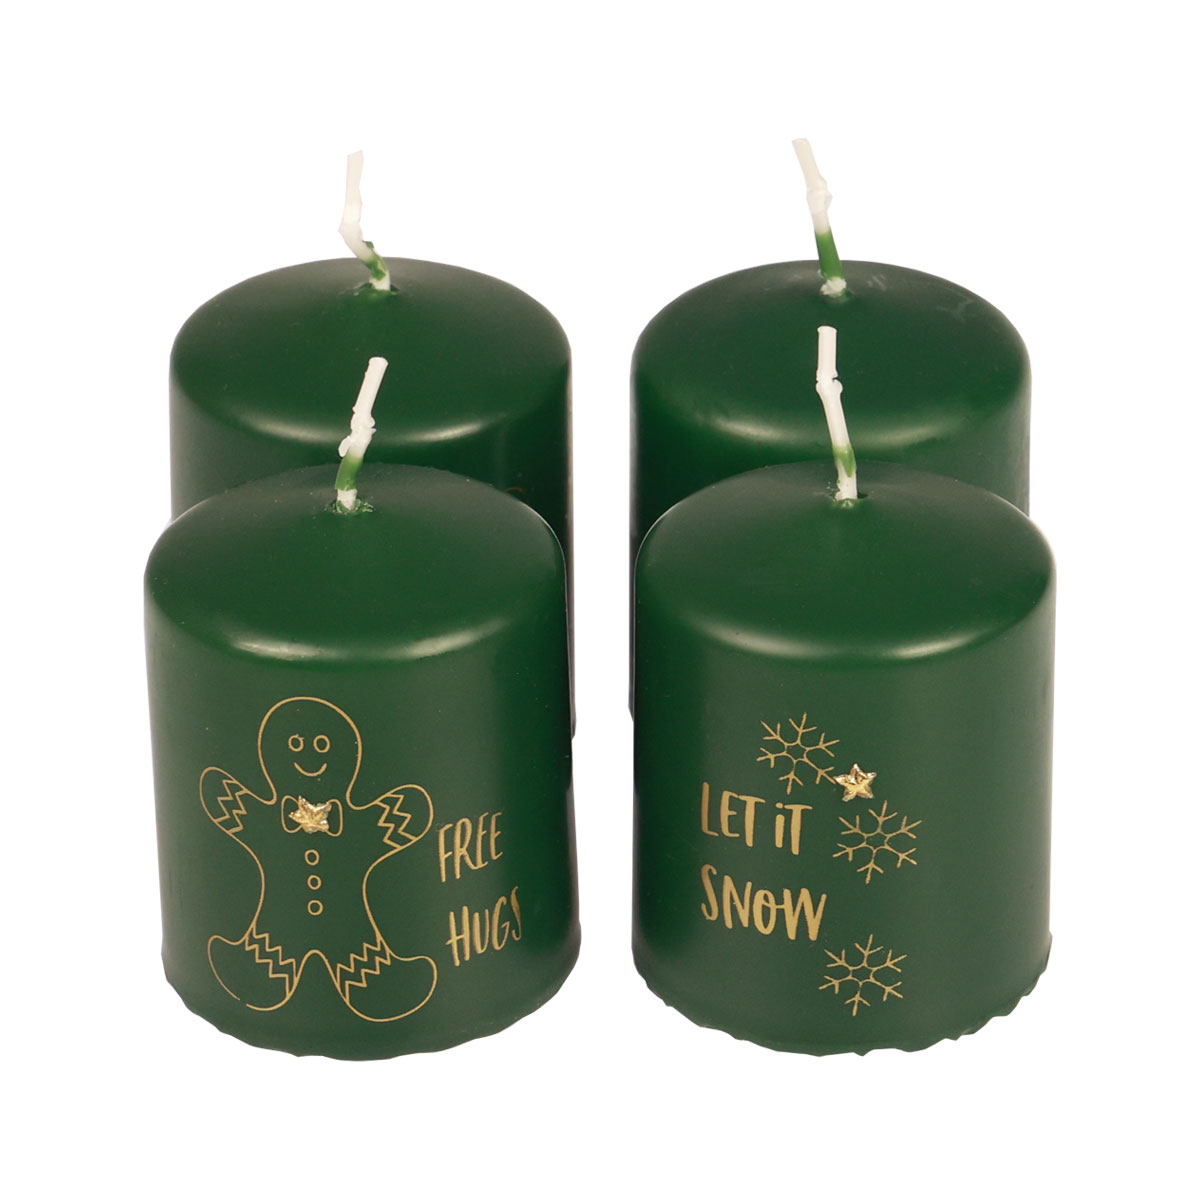 Quattro Candele Verdi Di Natale Immagine Stock - Immagine di candela, arco:  62386073